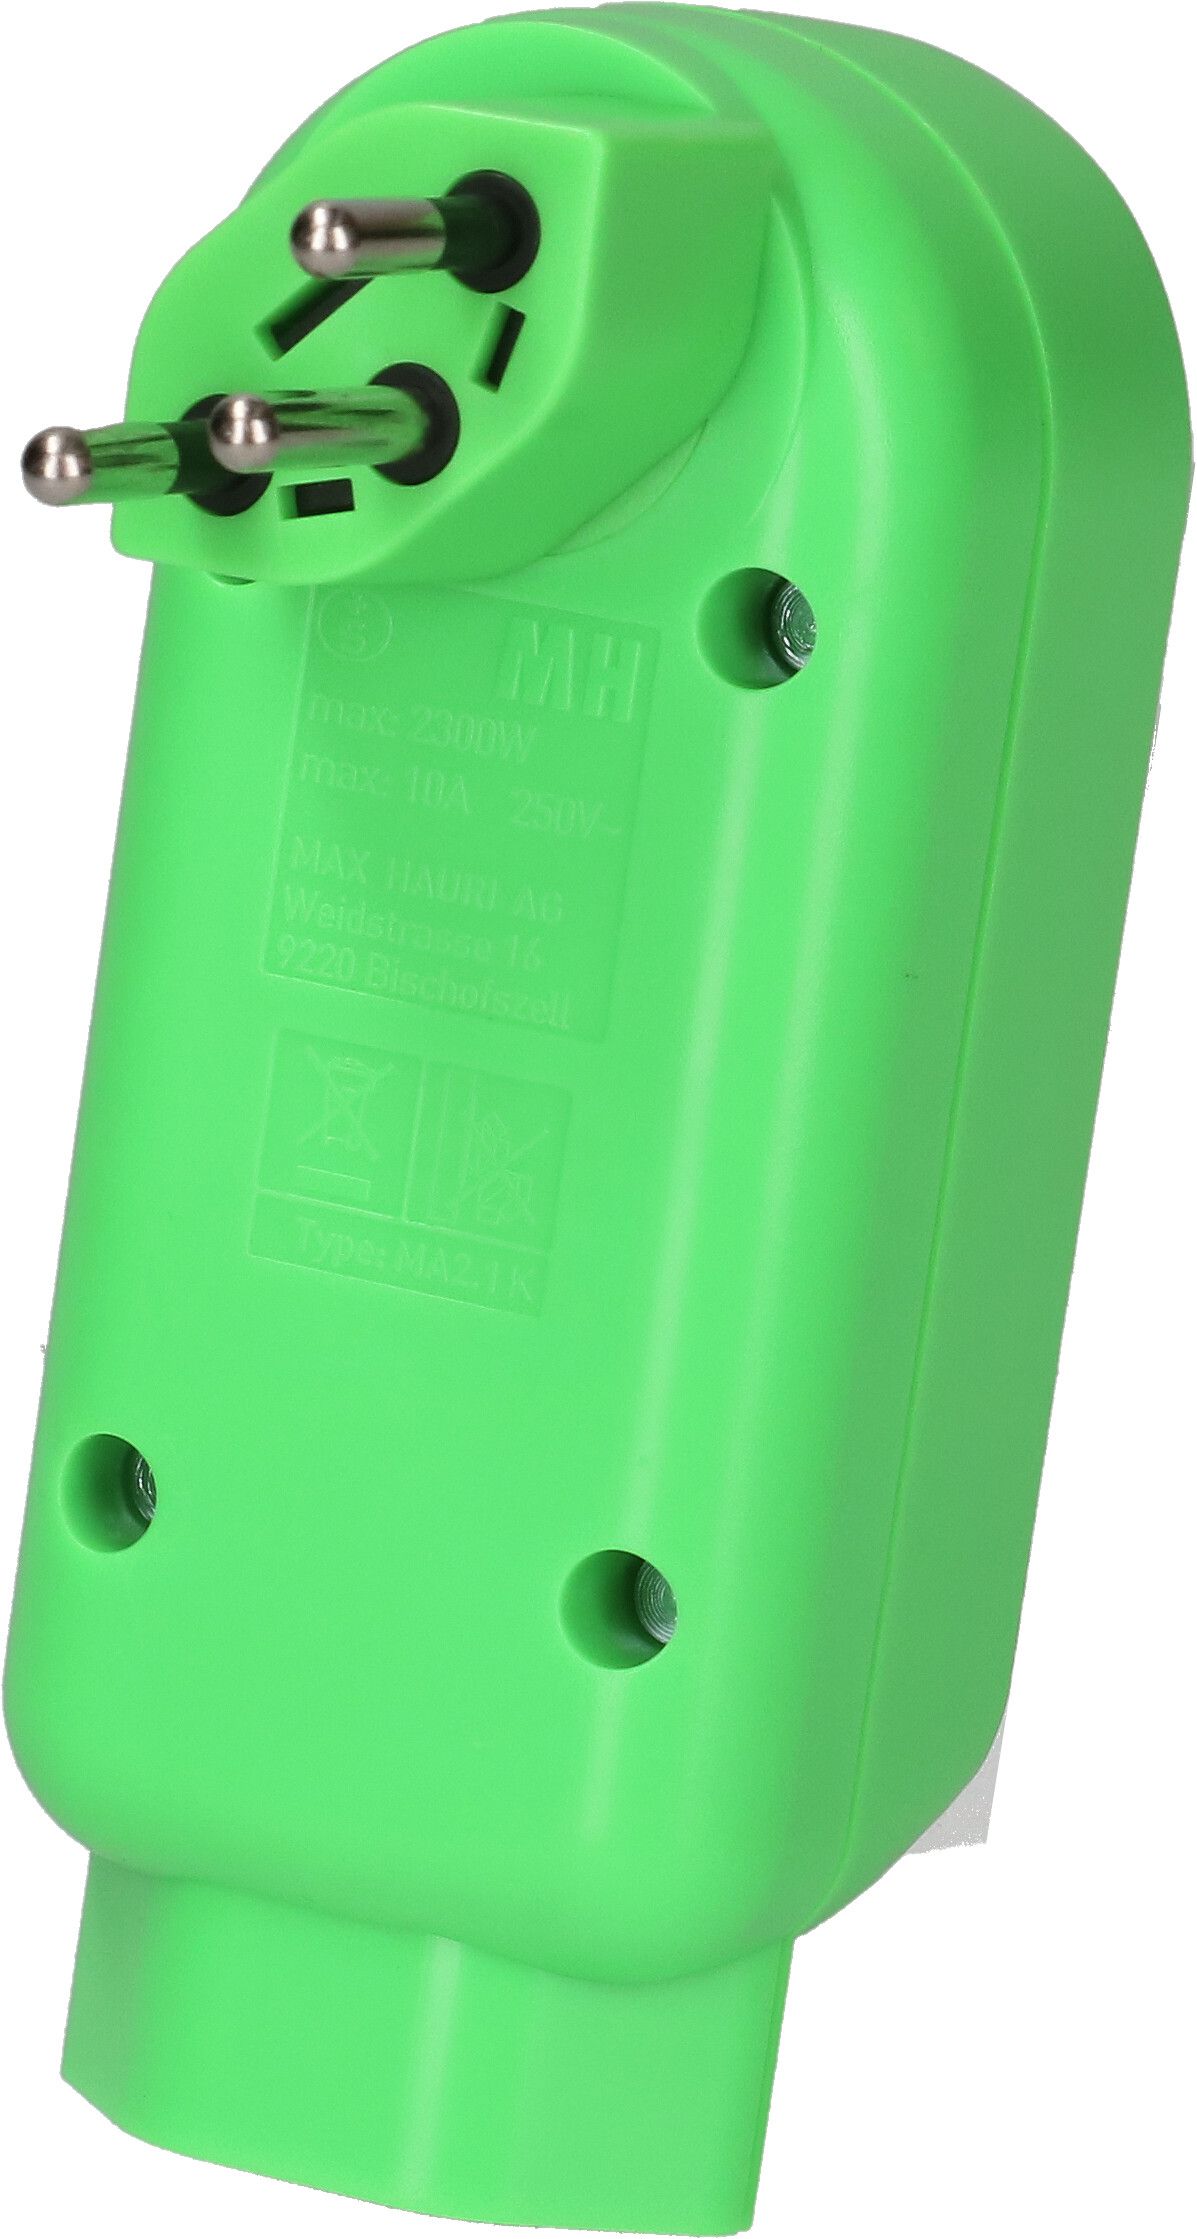 Abzweigstecker maxADAPTturn 2+1x Typ 13 fl-grün drehbar BS